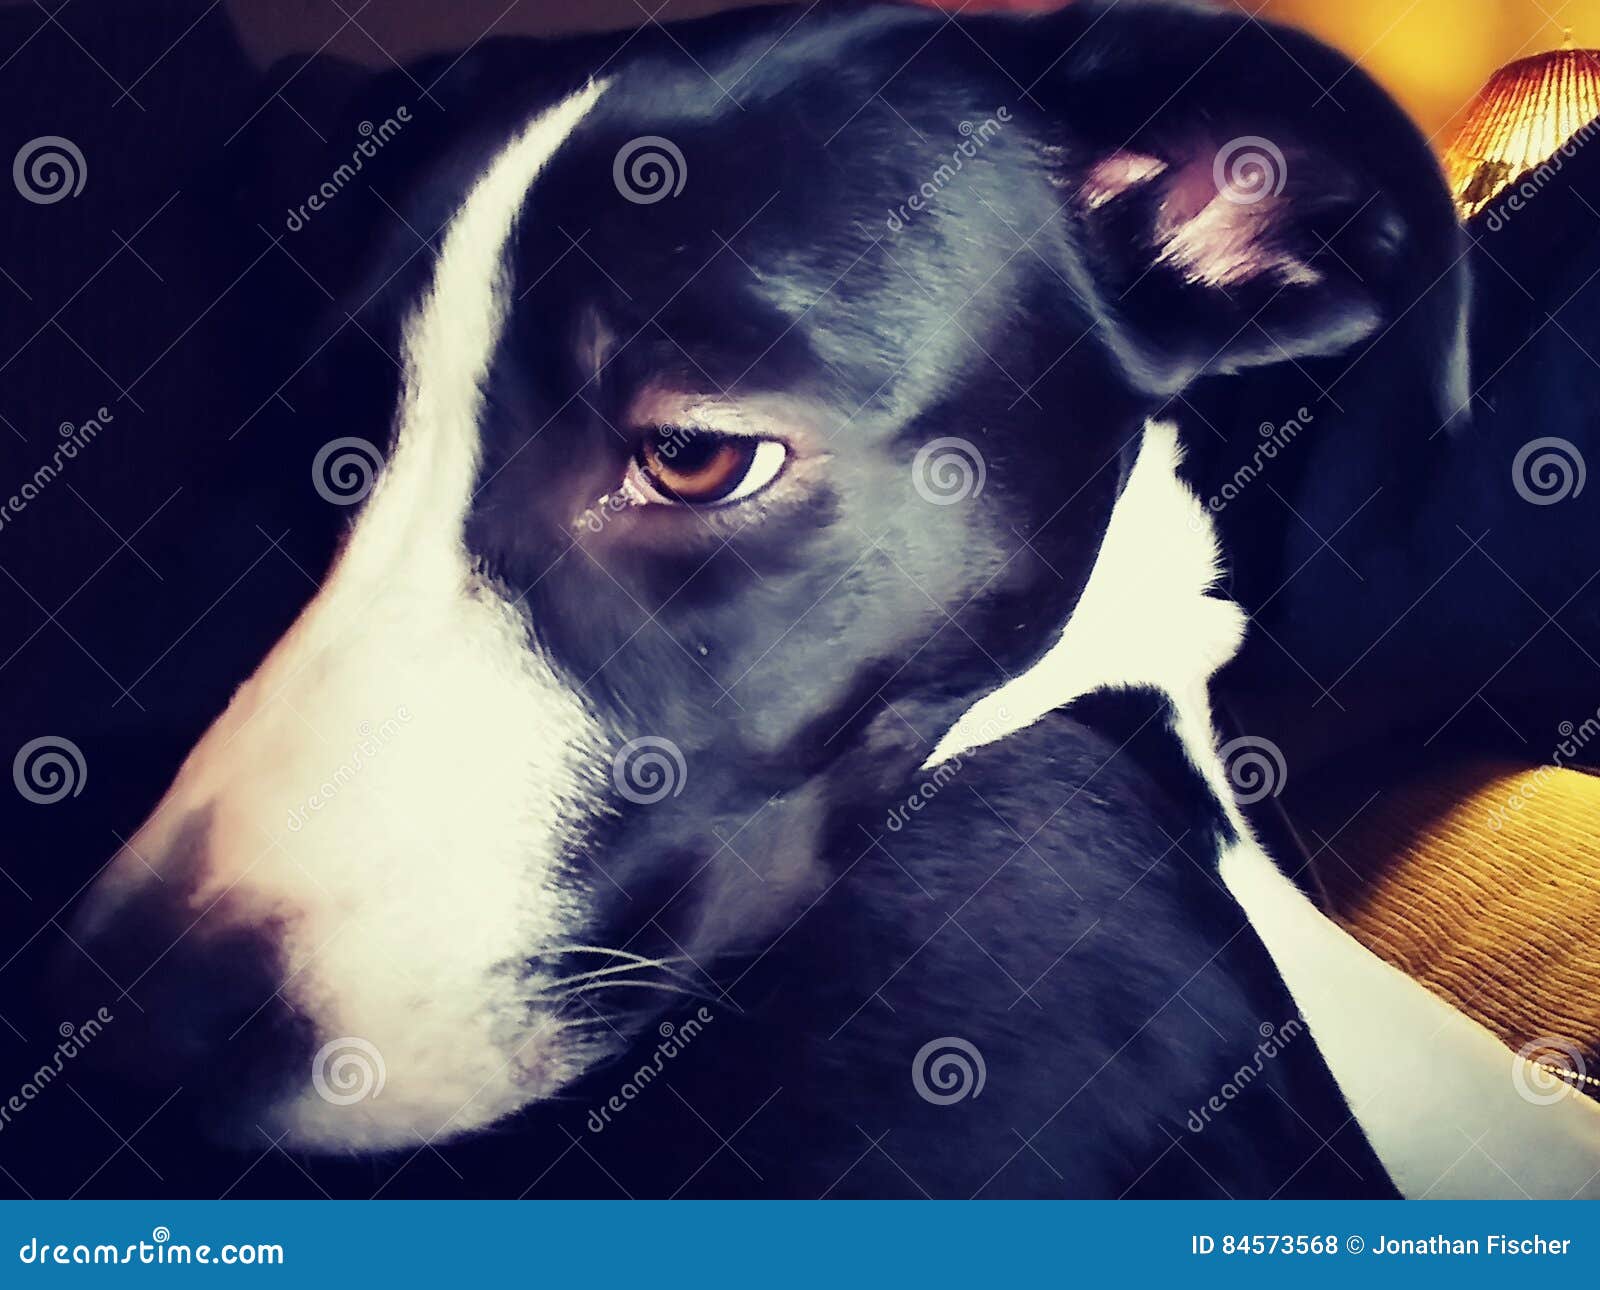 Border Collie Pitbull Mix Puppy Cute Photo Stock Photo - Image Of Jayda,  Bull: 84573568